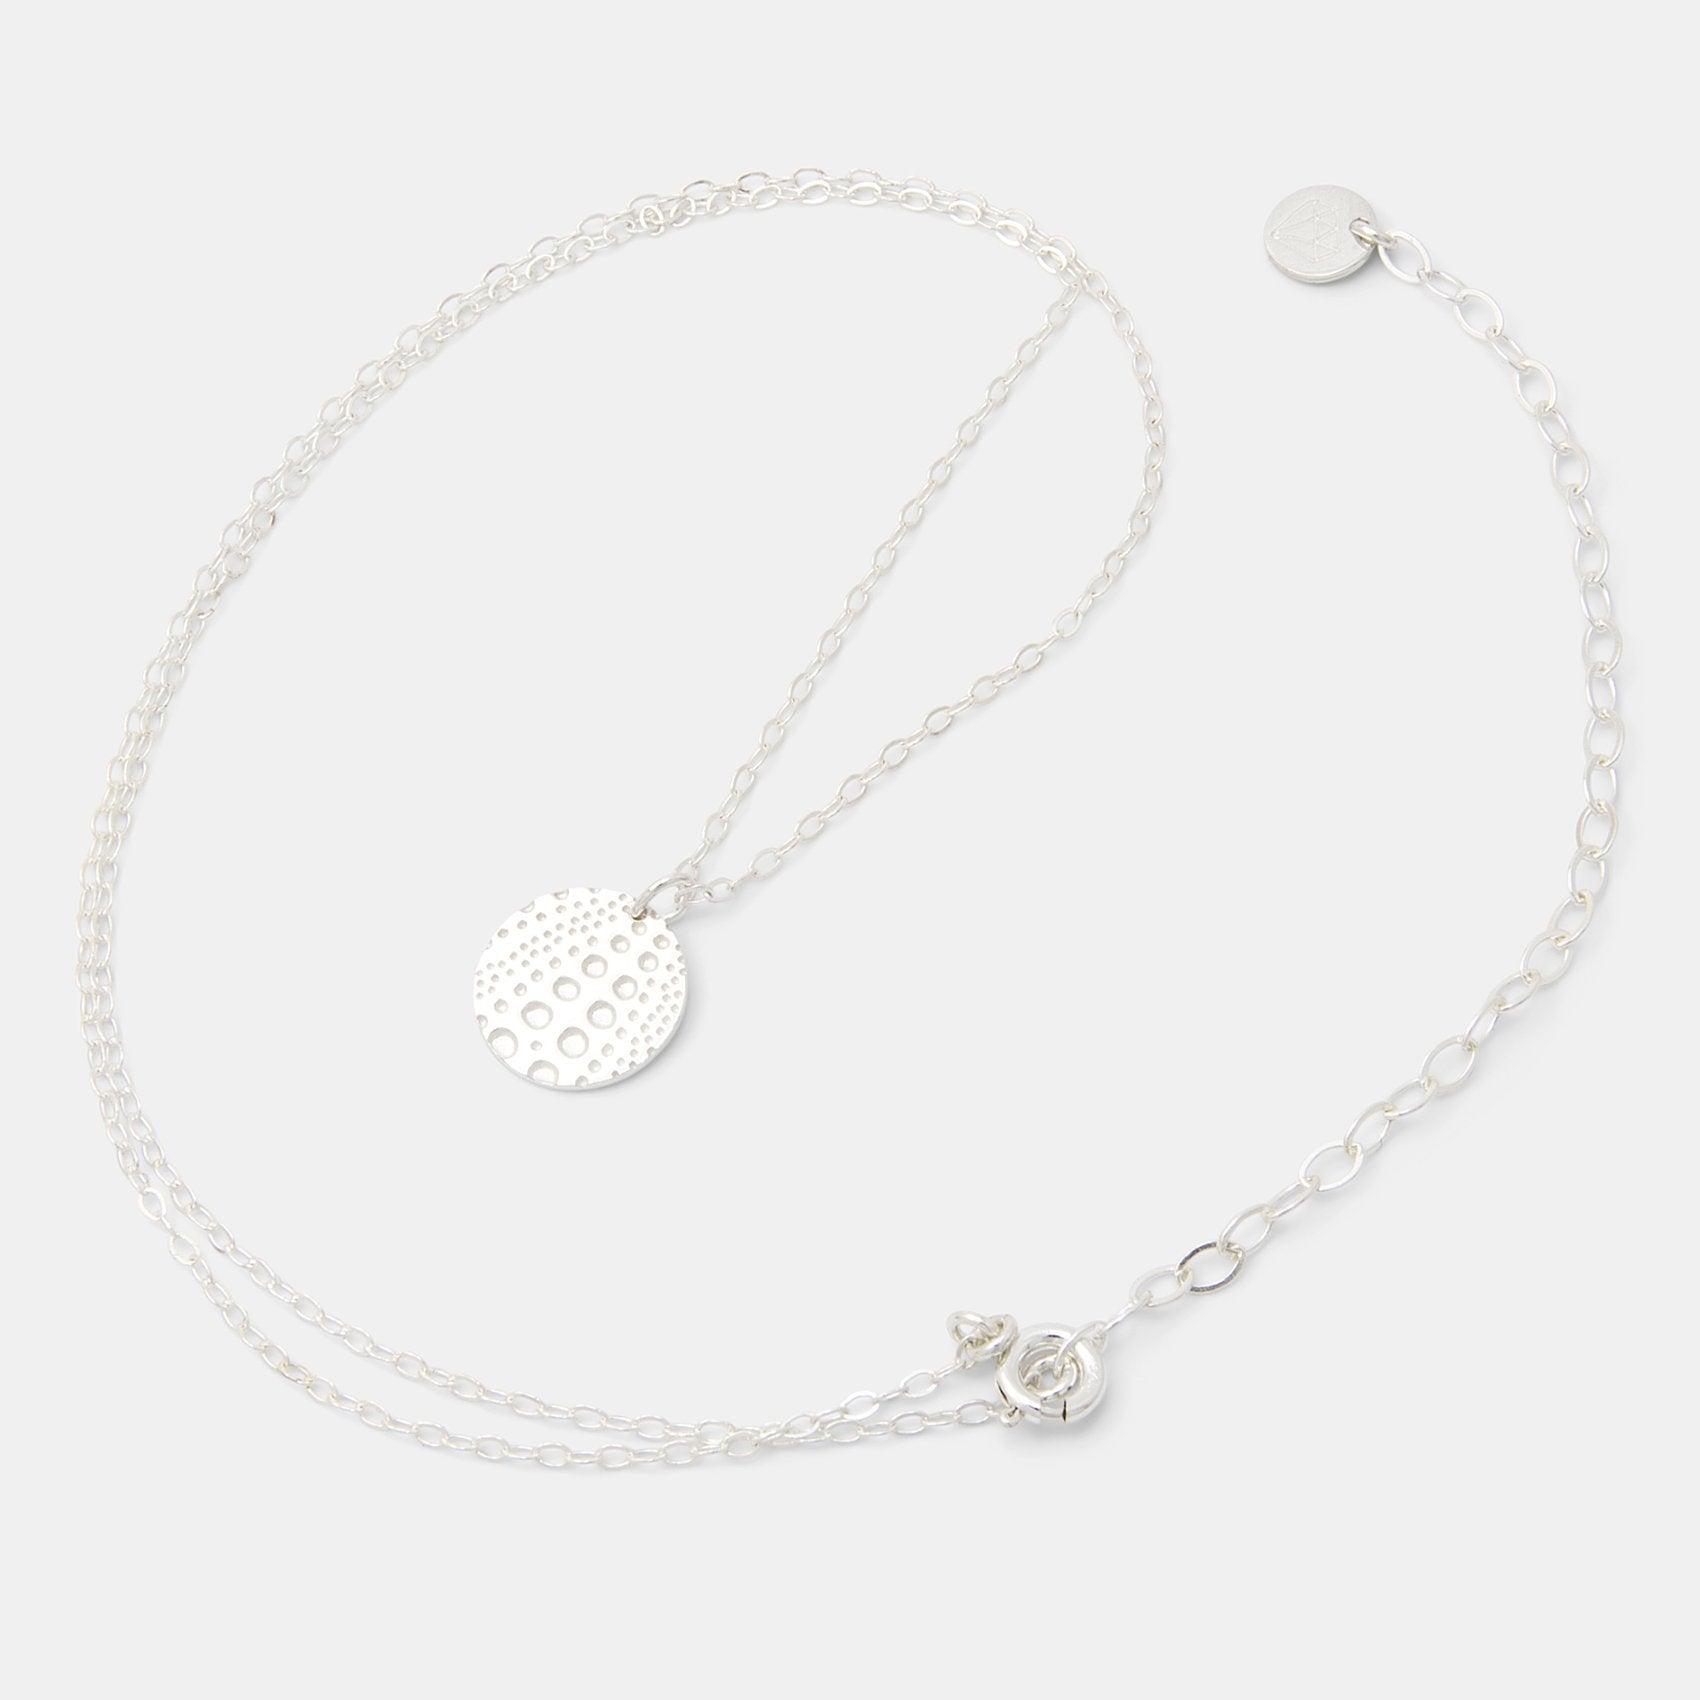 Sea urchin texture silver pendant necklace - Simone Walsh Jewellery Australia